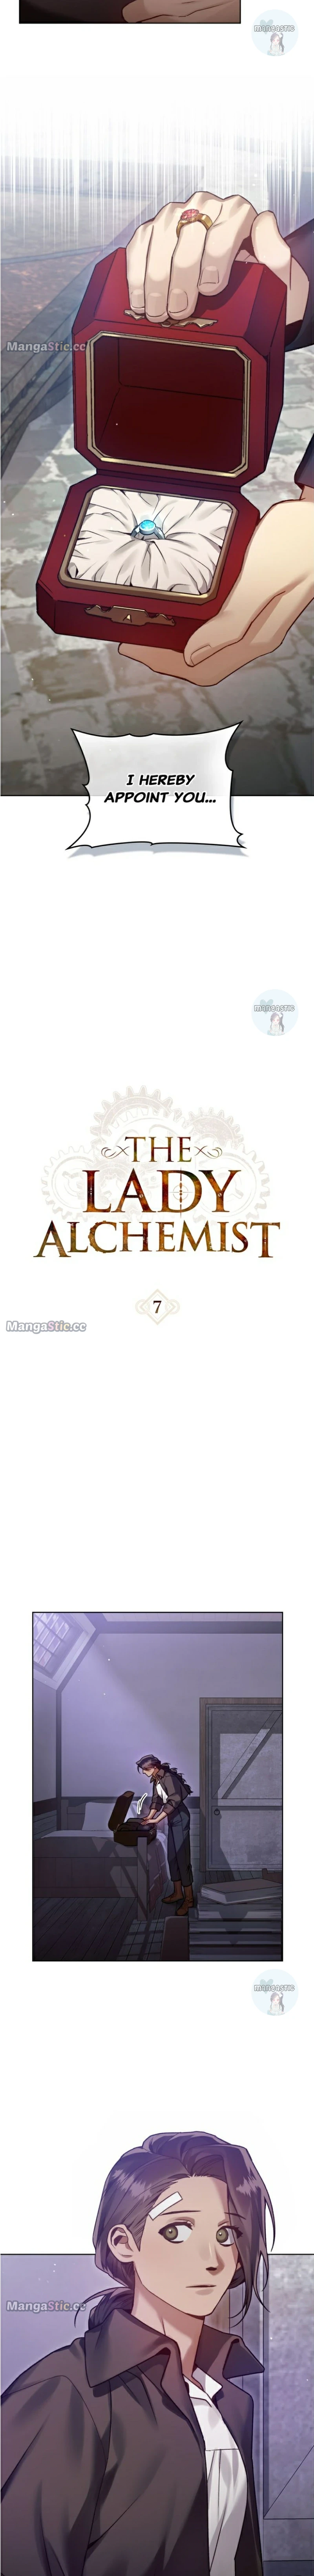 The Lady Alchemist chapter 7